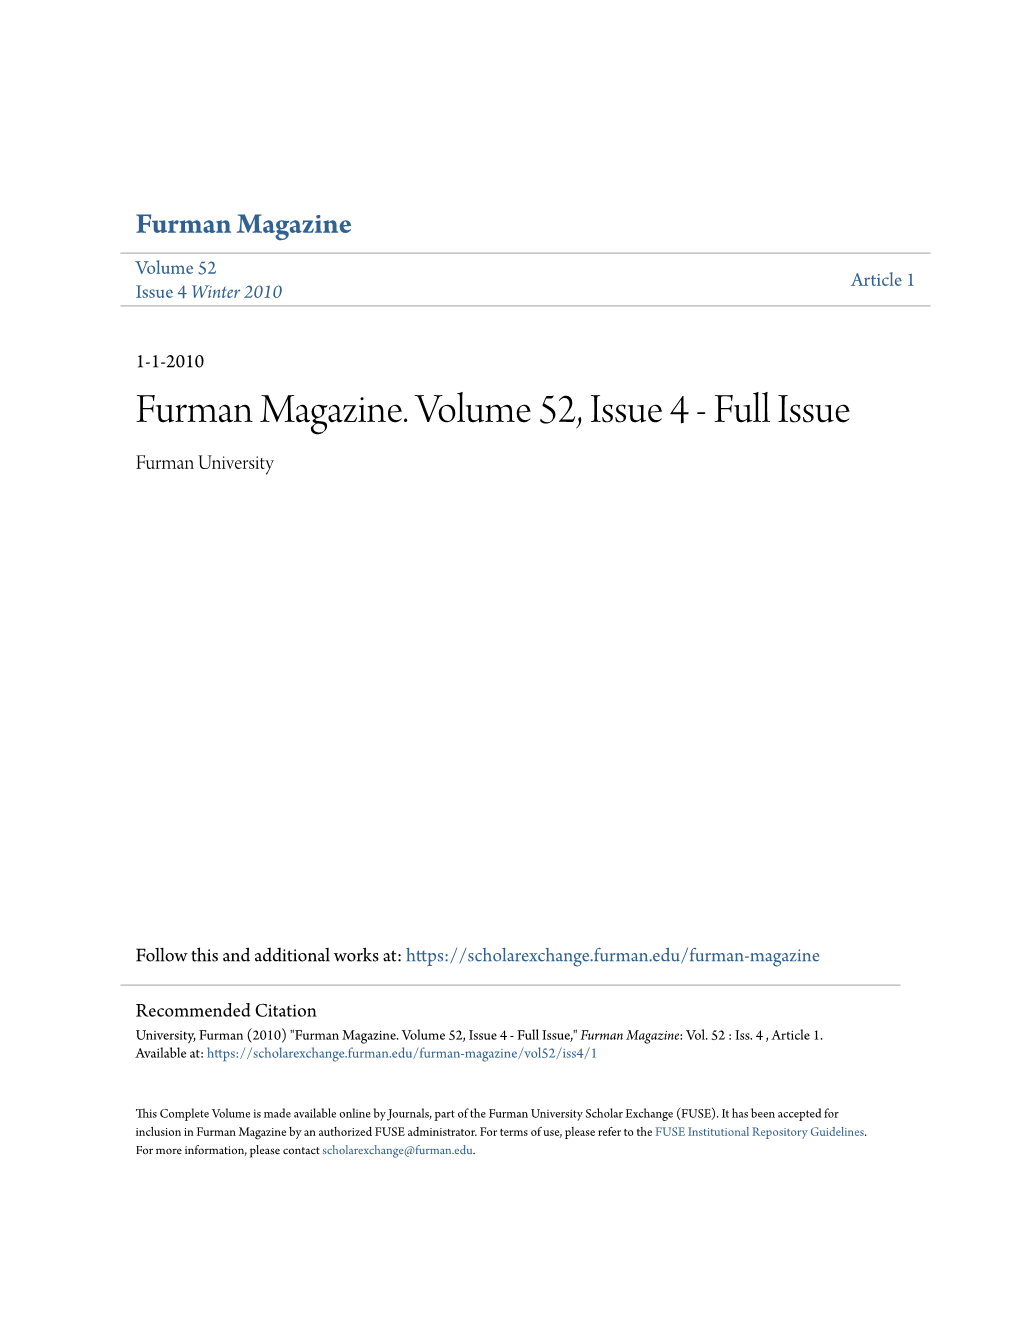 Furman Magazine. Volume 52, Issue 4 - Full Issue Furman University